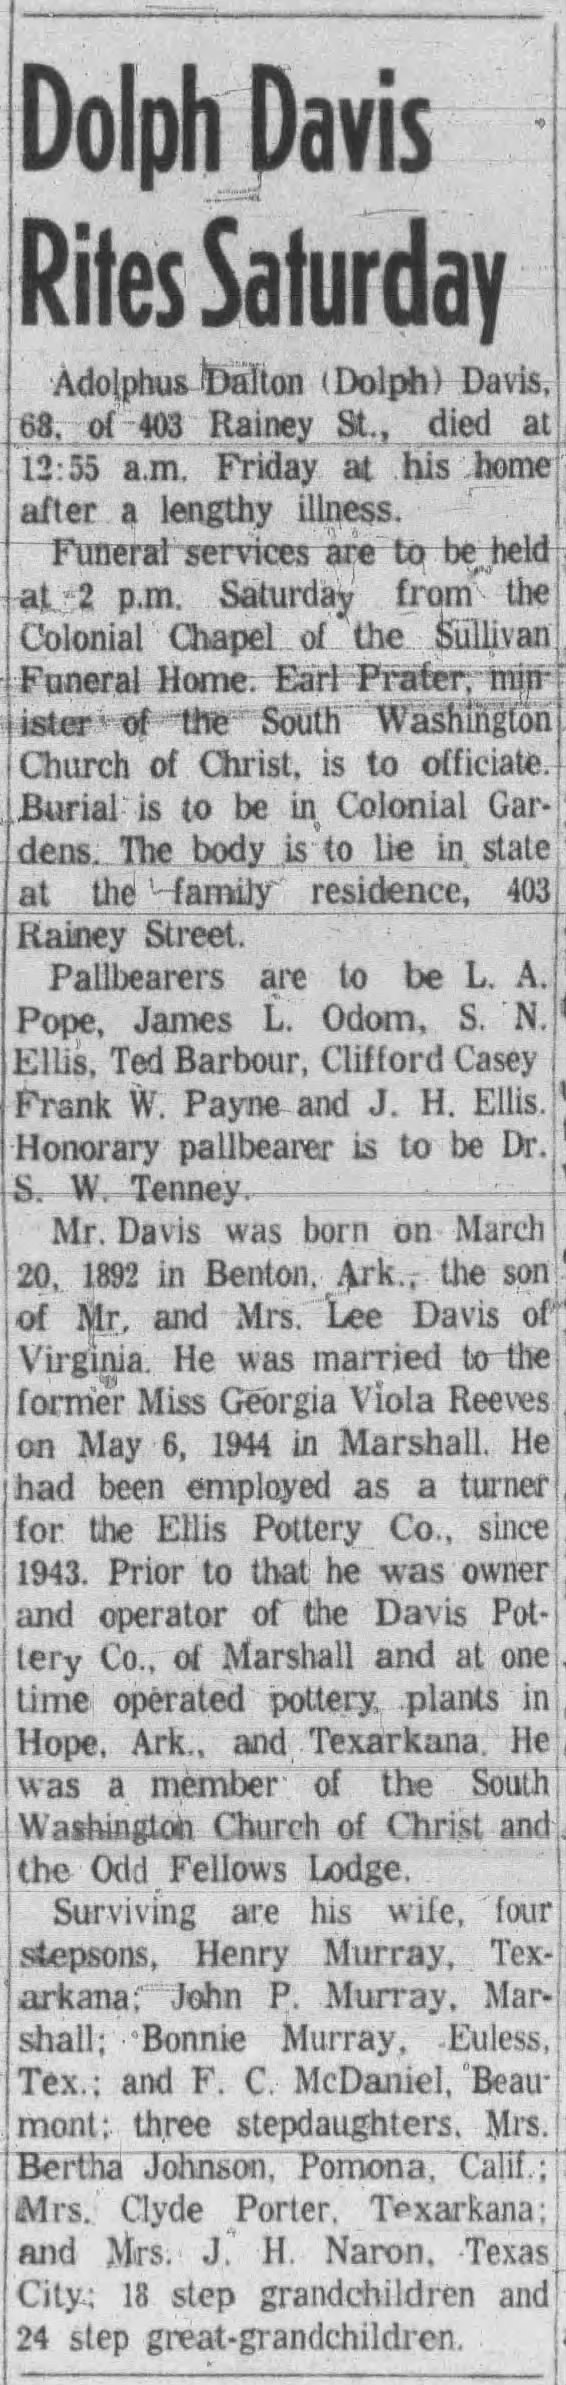 The Marshall News Messenger, Friday, June 17, 1960